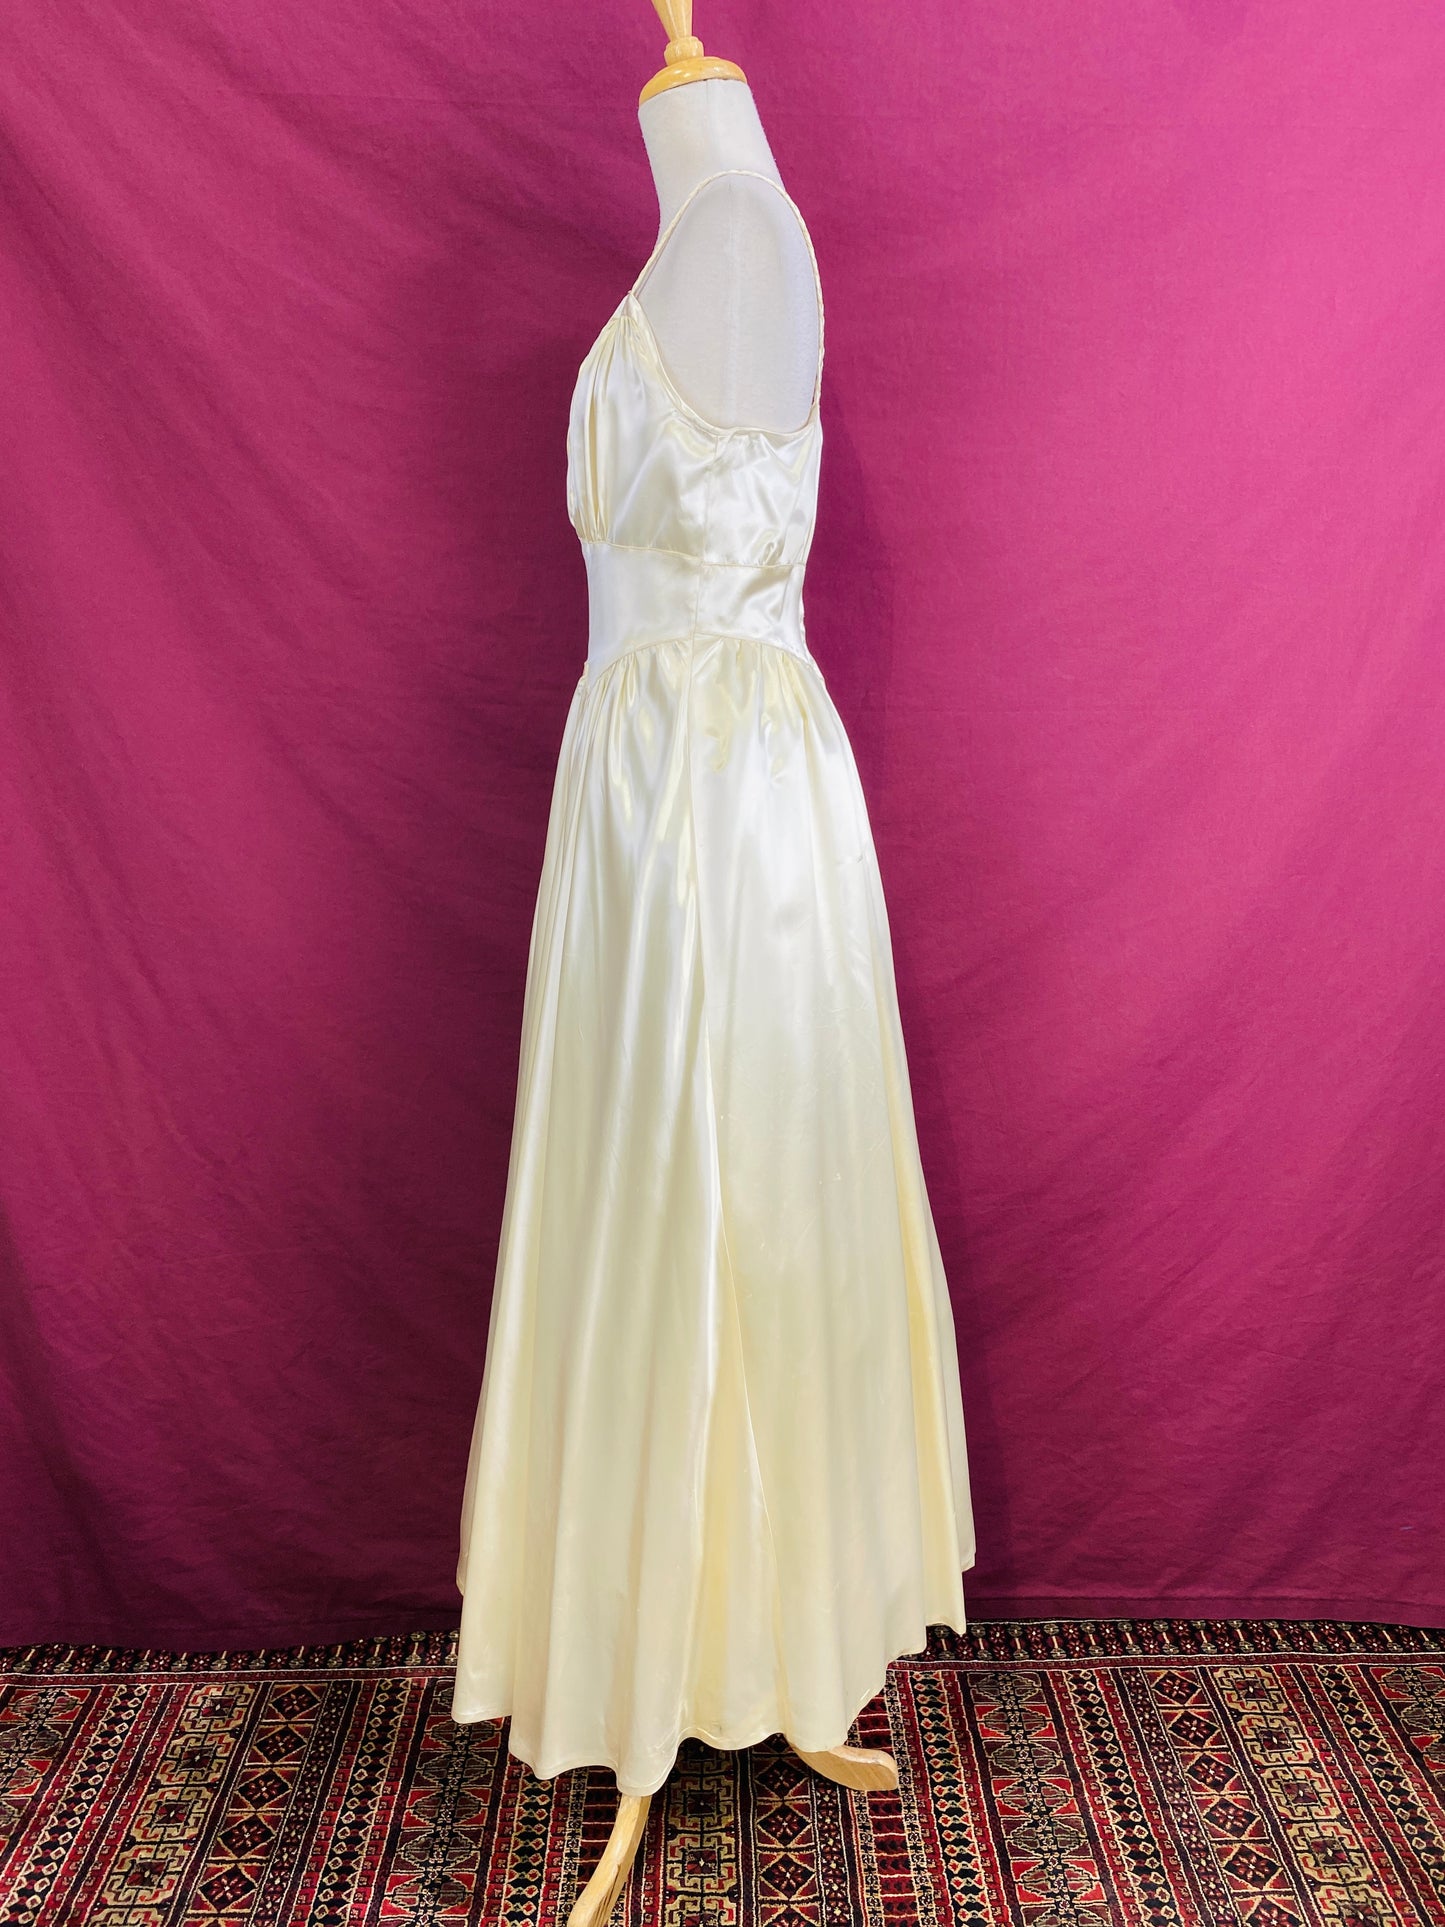 Vintage 1940s Liquid Satin Wedding Dress with Braided Straps, S-M